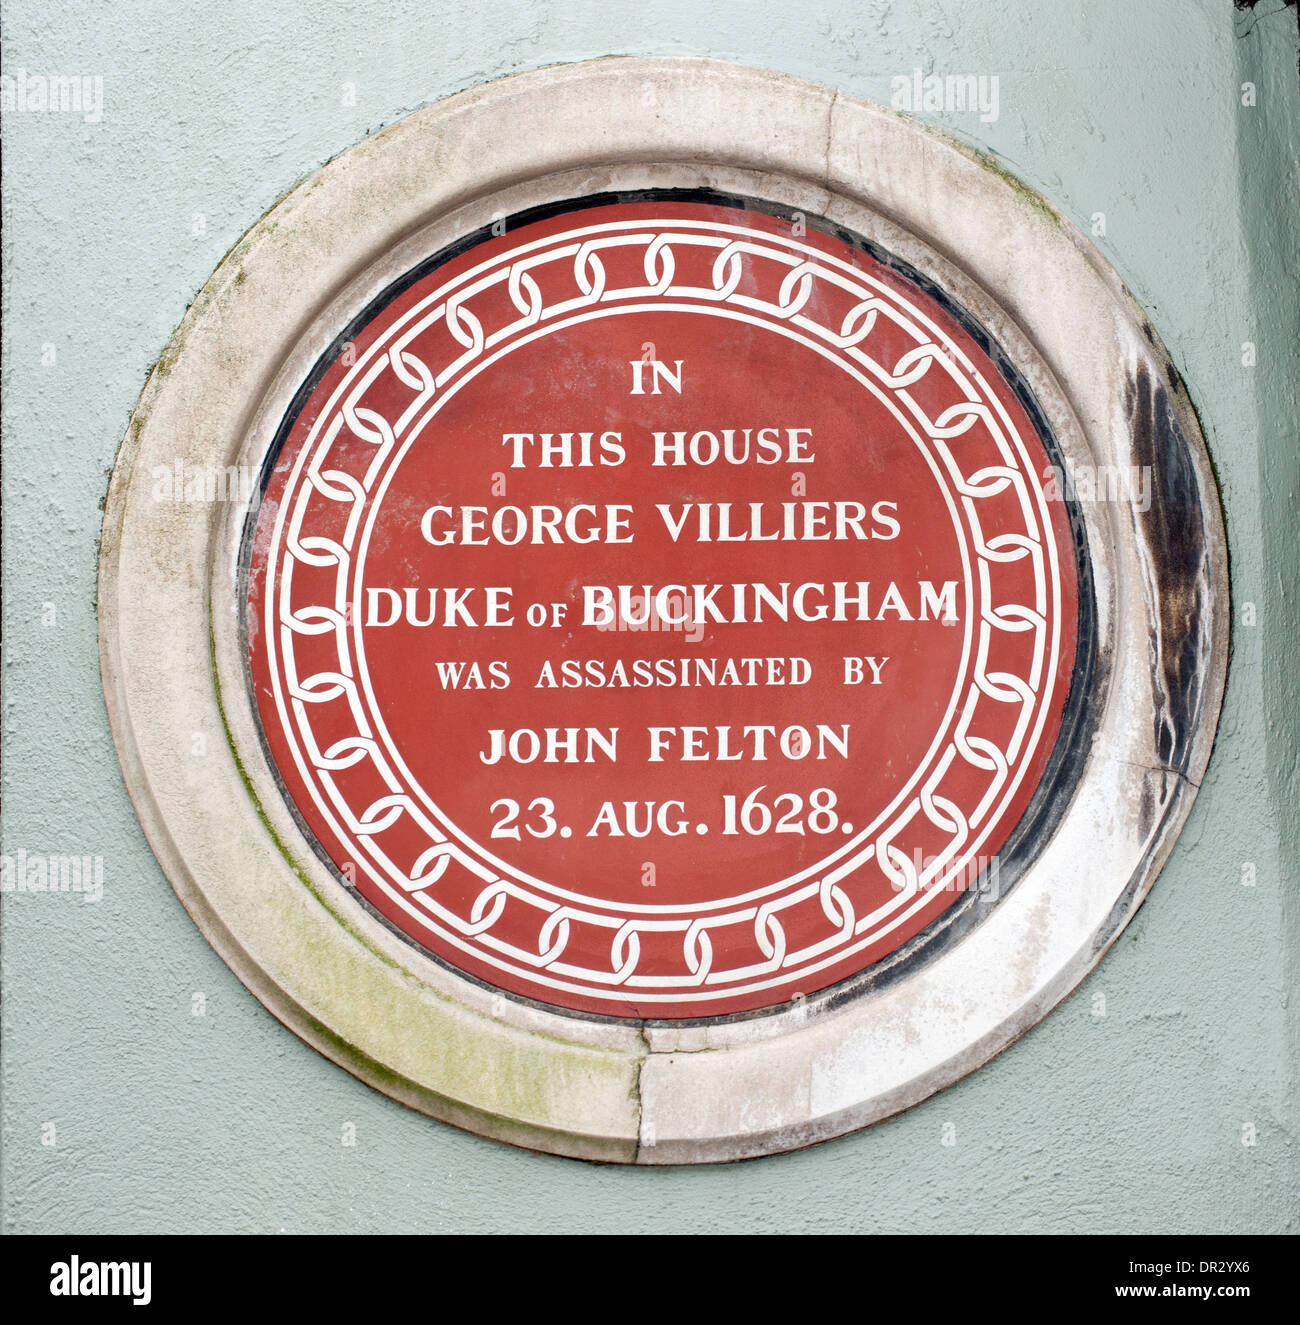 Commemorative plaque for the assassination of George Villiers Duke of Buckingham by John Felton, High Street, Portsmouth, UK. Stock Photo